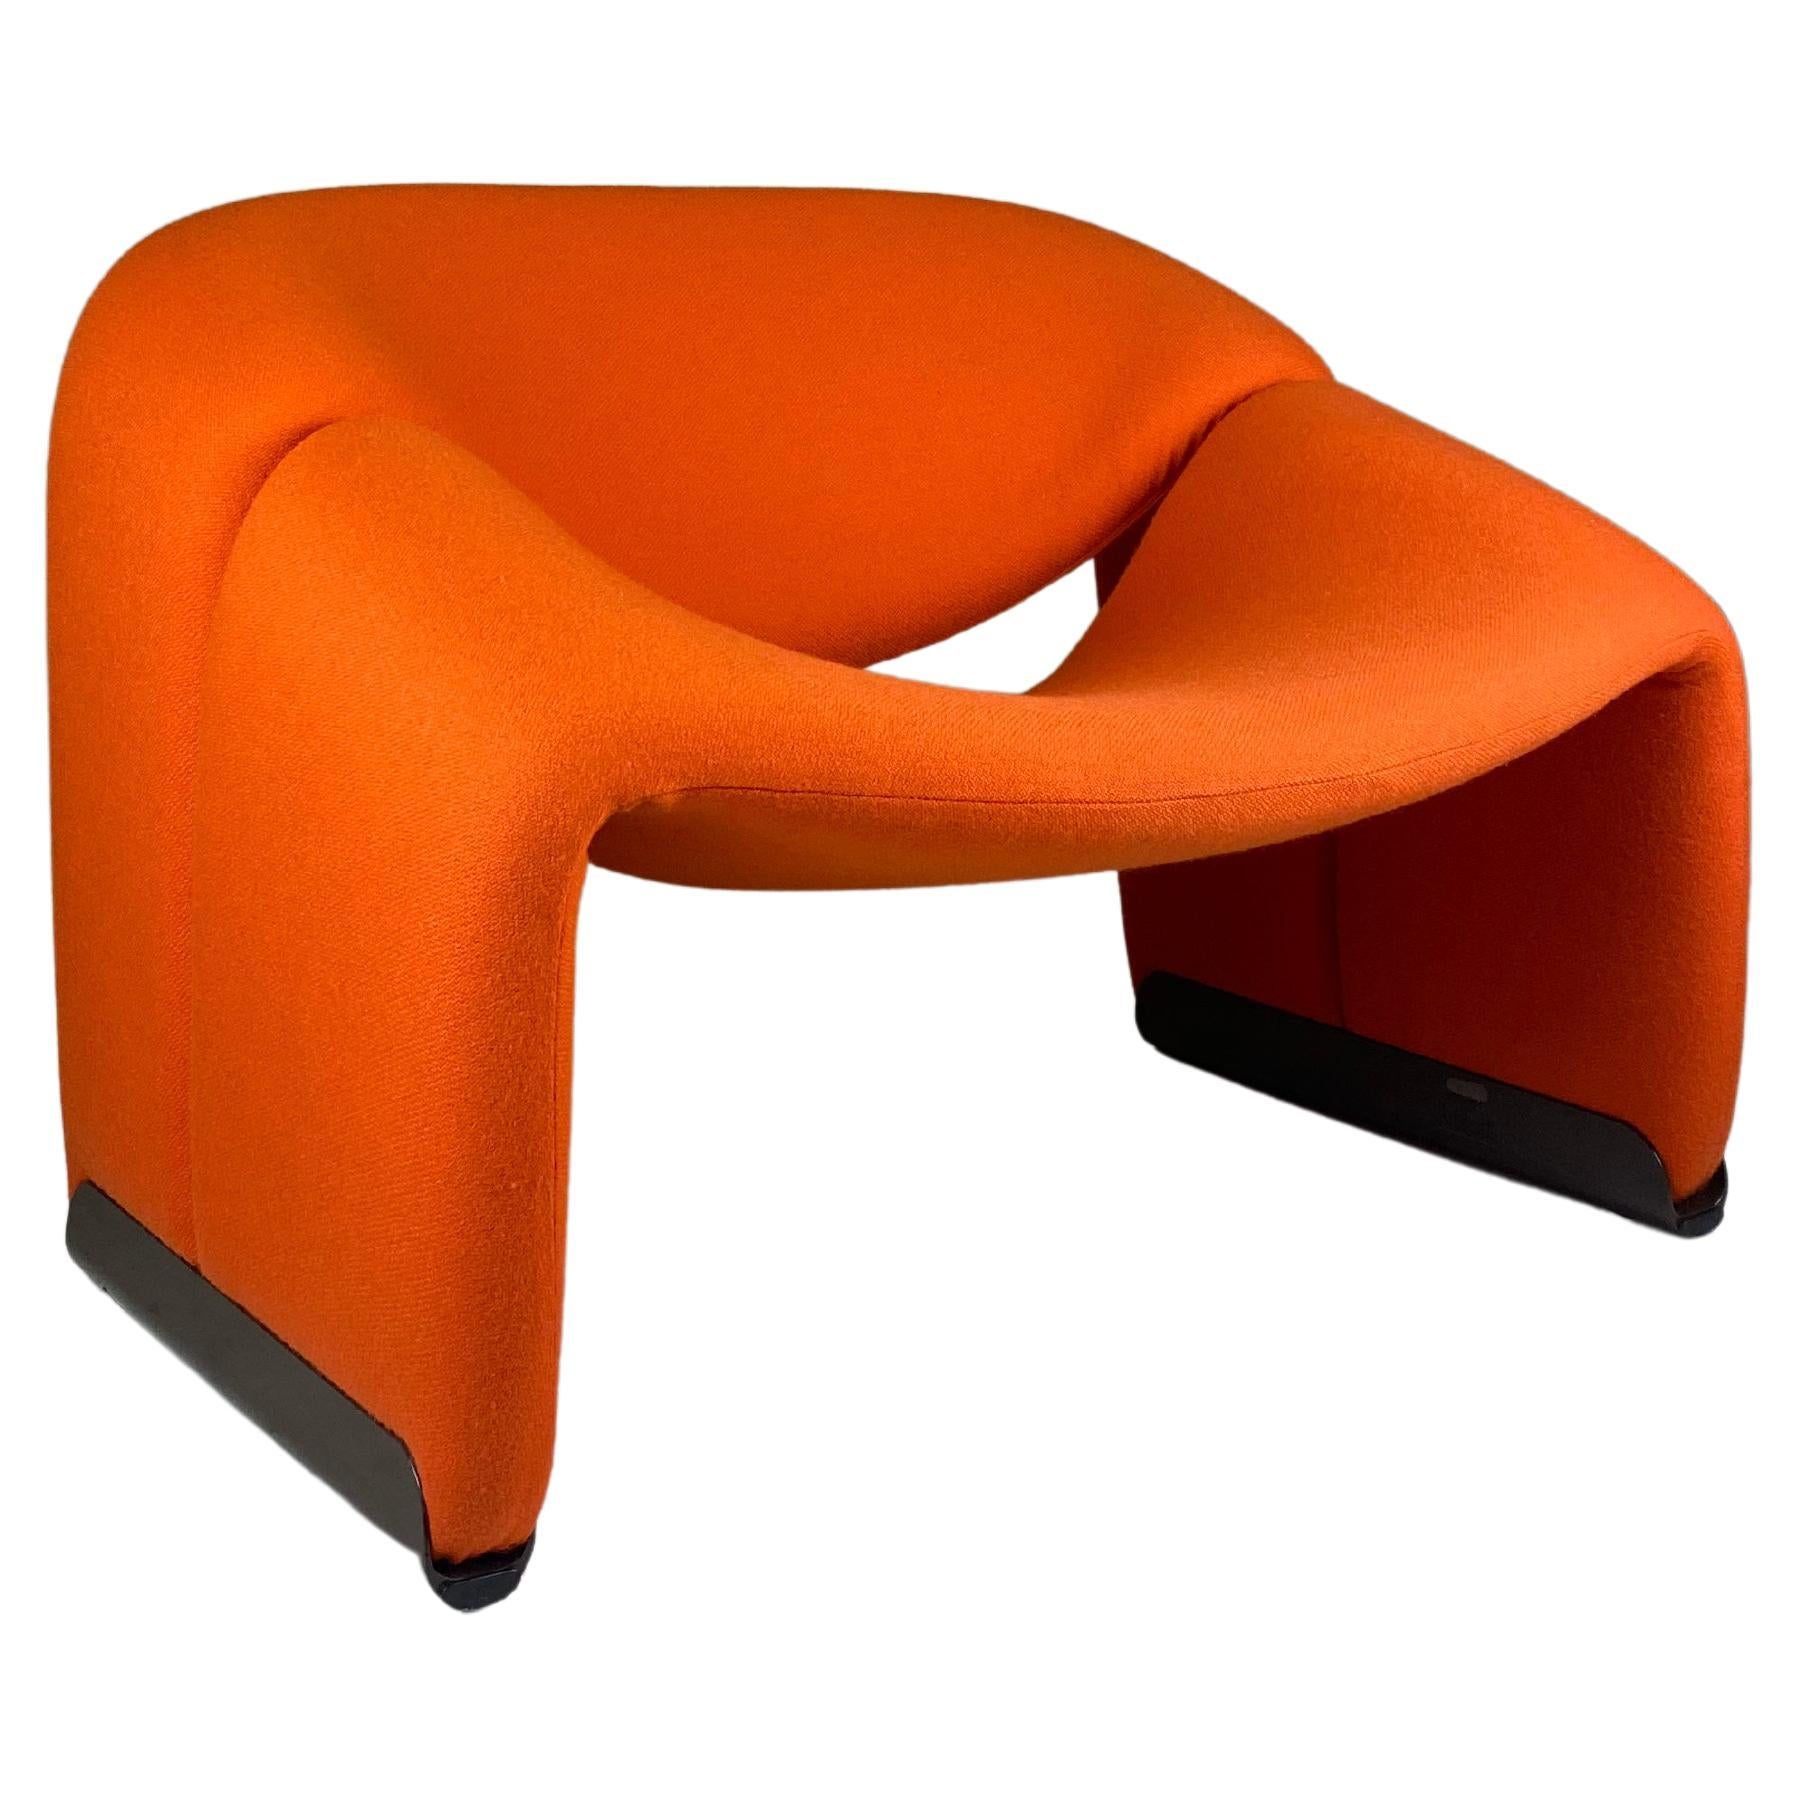 Artifort F598 Groovy Armchair by Pierre Paulin M-Chair, Mid-Century Modern